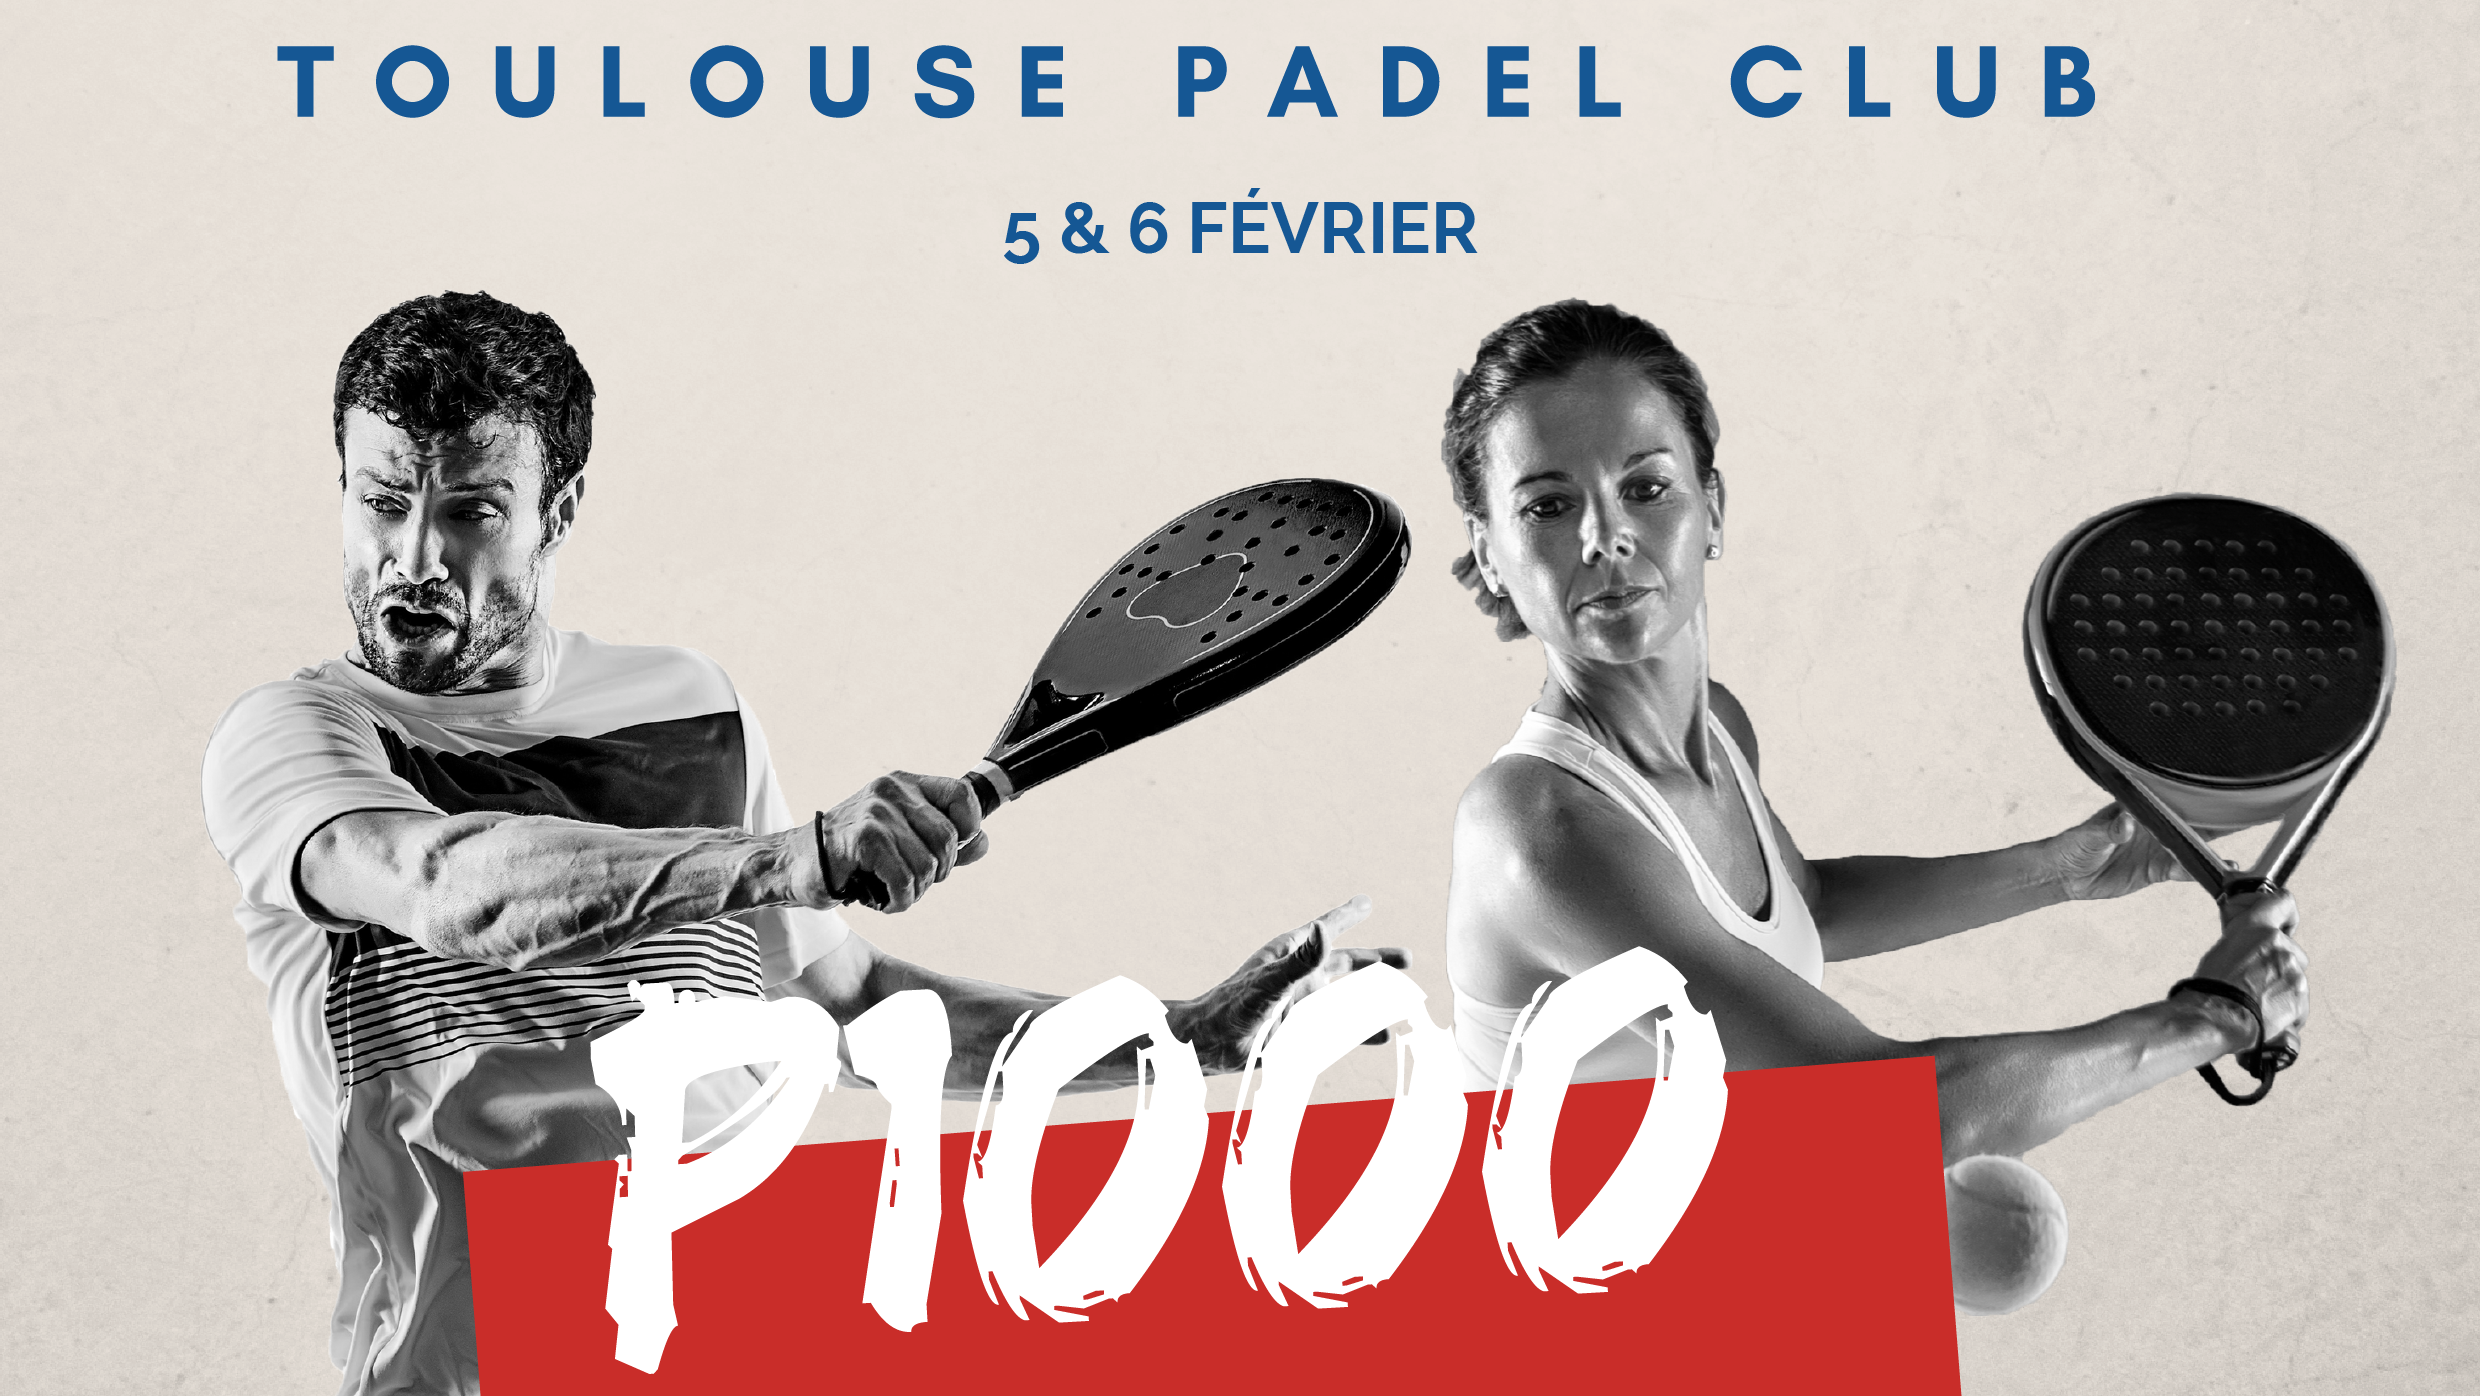 Toulouse Padel Club: P1000 M en F op 5 en 6 februari 2022